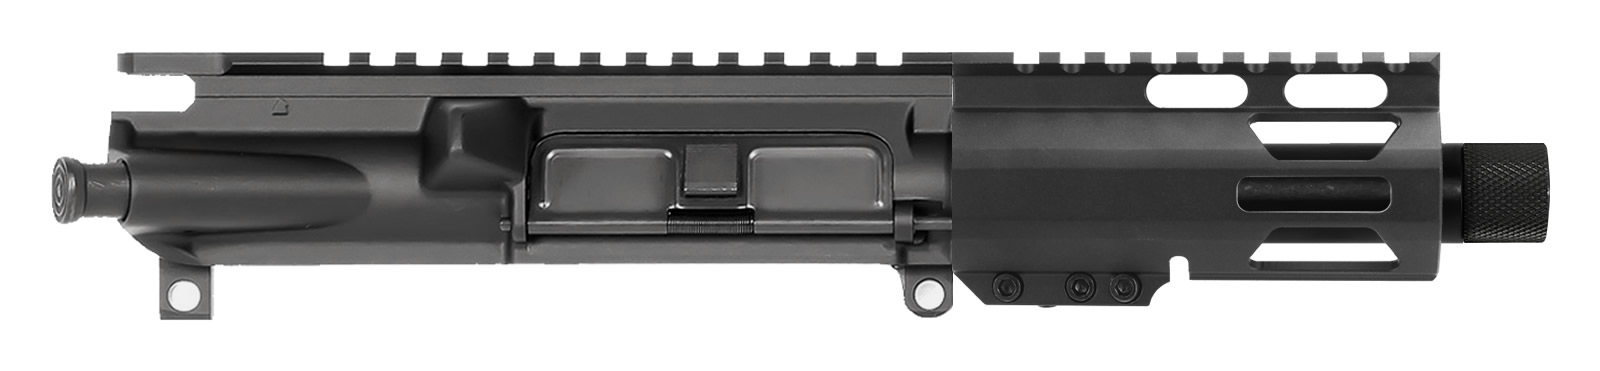 AR-9 AR Pistol Upper Assembly 4" with 4" M-LOK Thread Protector